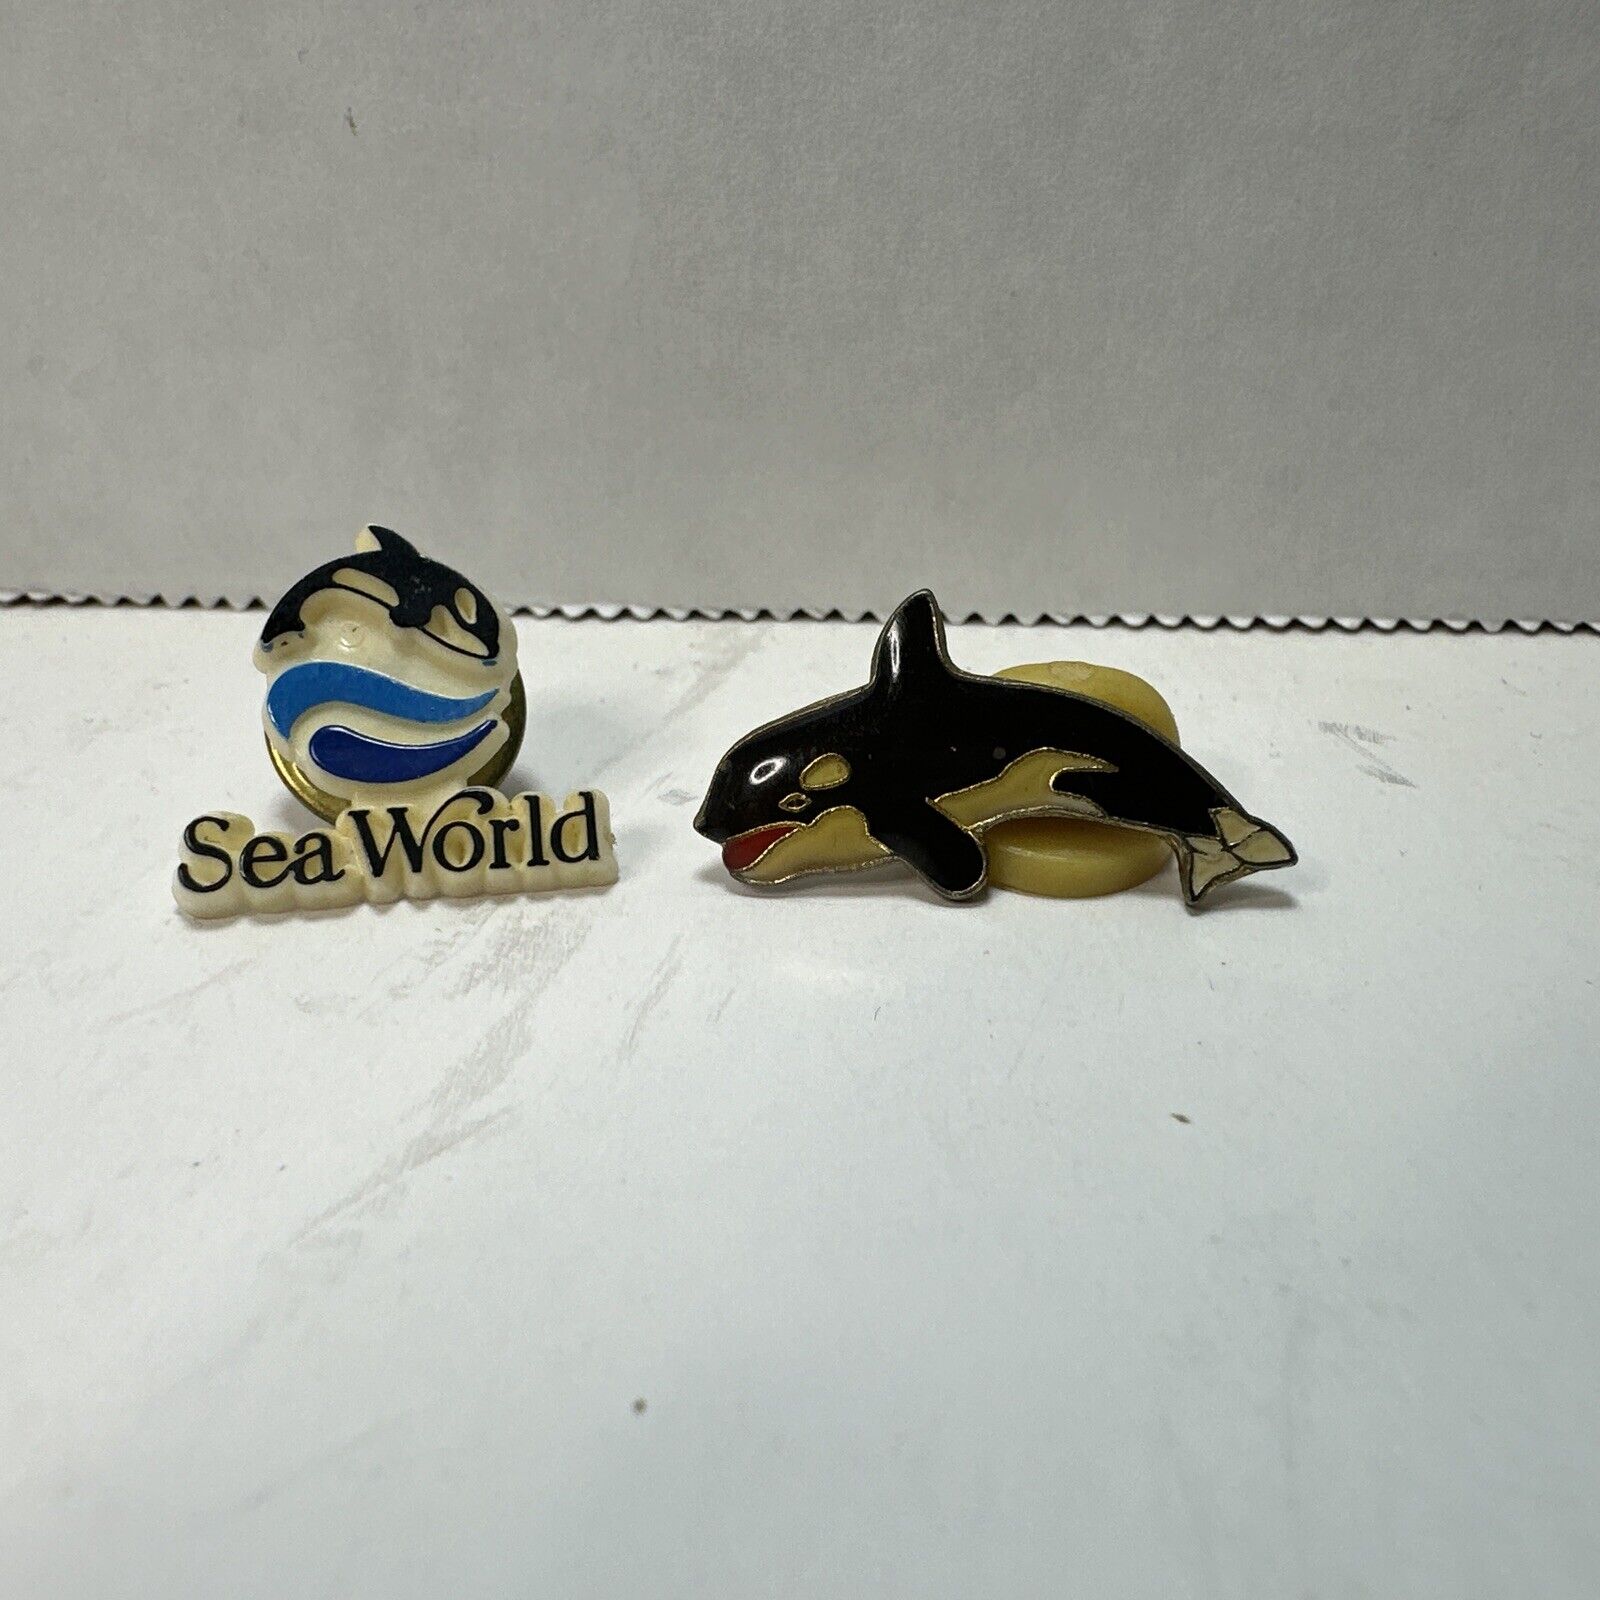 2 Vtg Small Sea World Souvenir Plastic Lapel Pin w/ Shamu Killer Whale